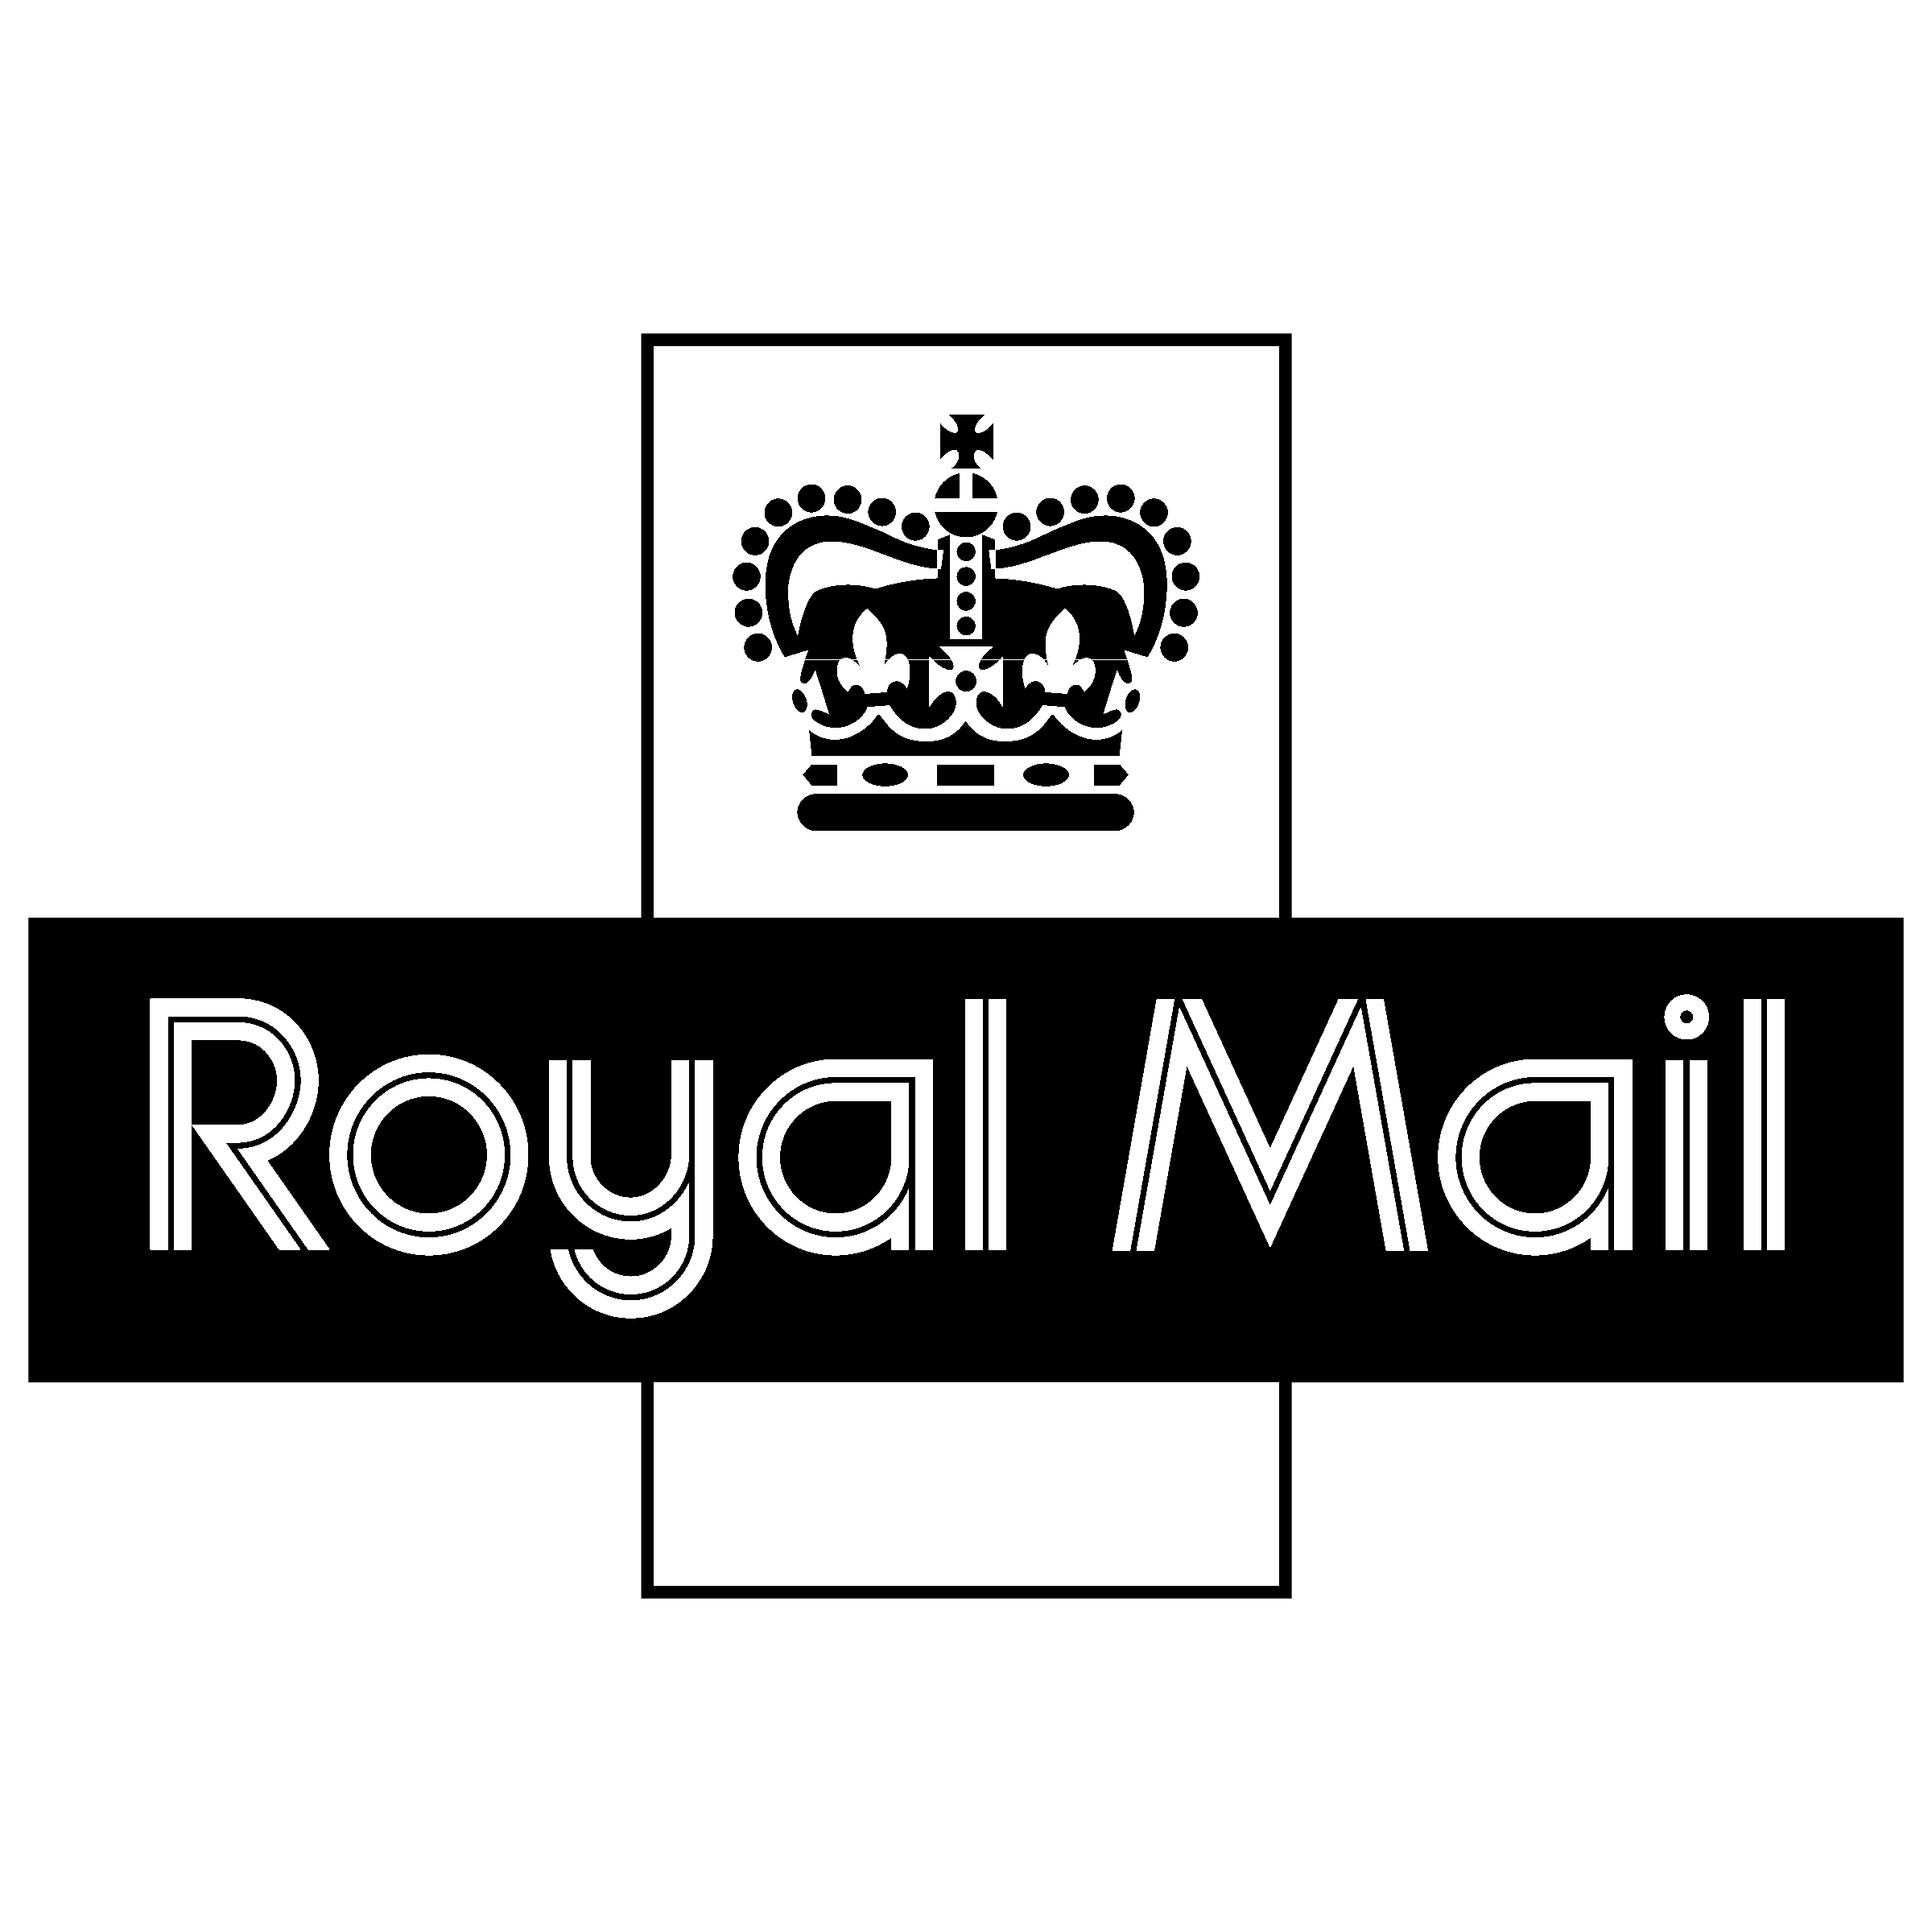 White Mail Logo - Royal Mail Logo PNG Transparent & SVG Vector - Freebie Supply